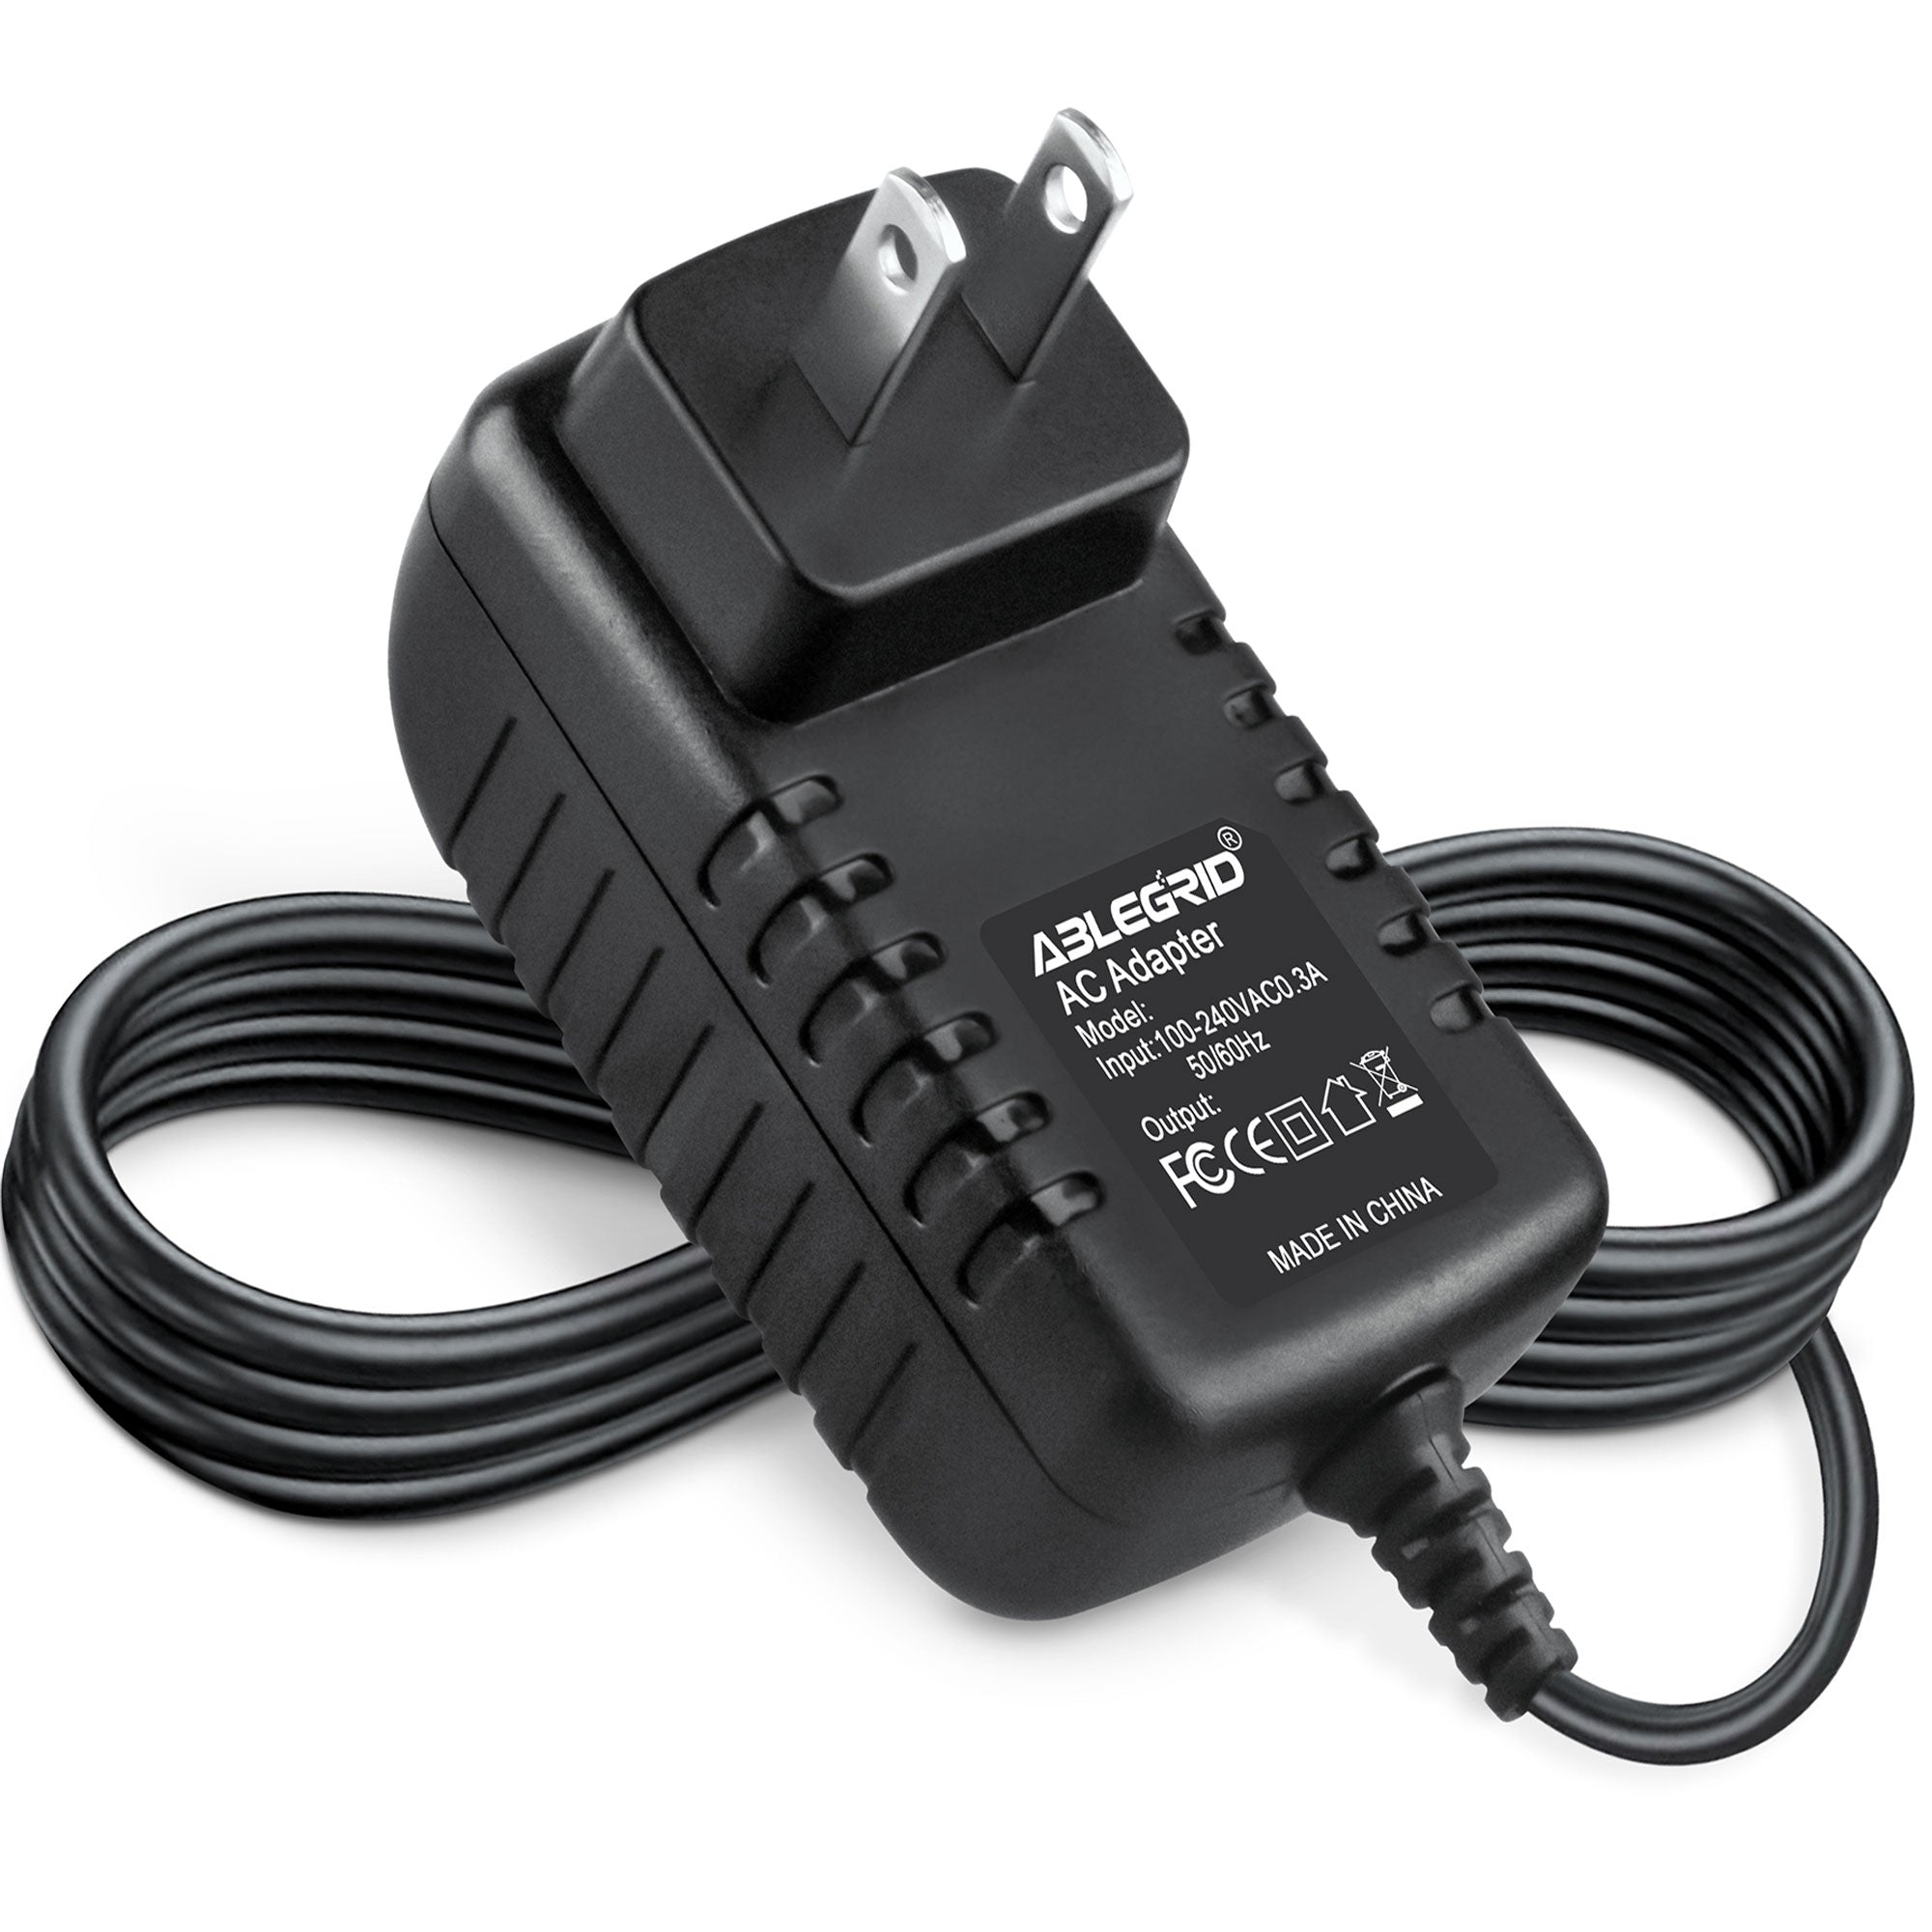 AbleGrid AC Adapter Charger for Kraft Tech CDP02CN-11 Cordless Drill Krafttech Driver PSU